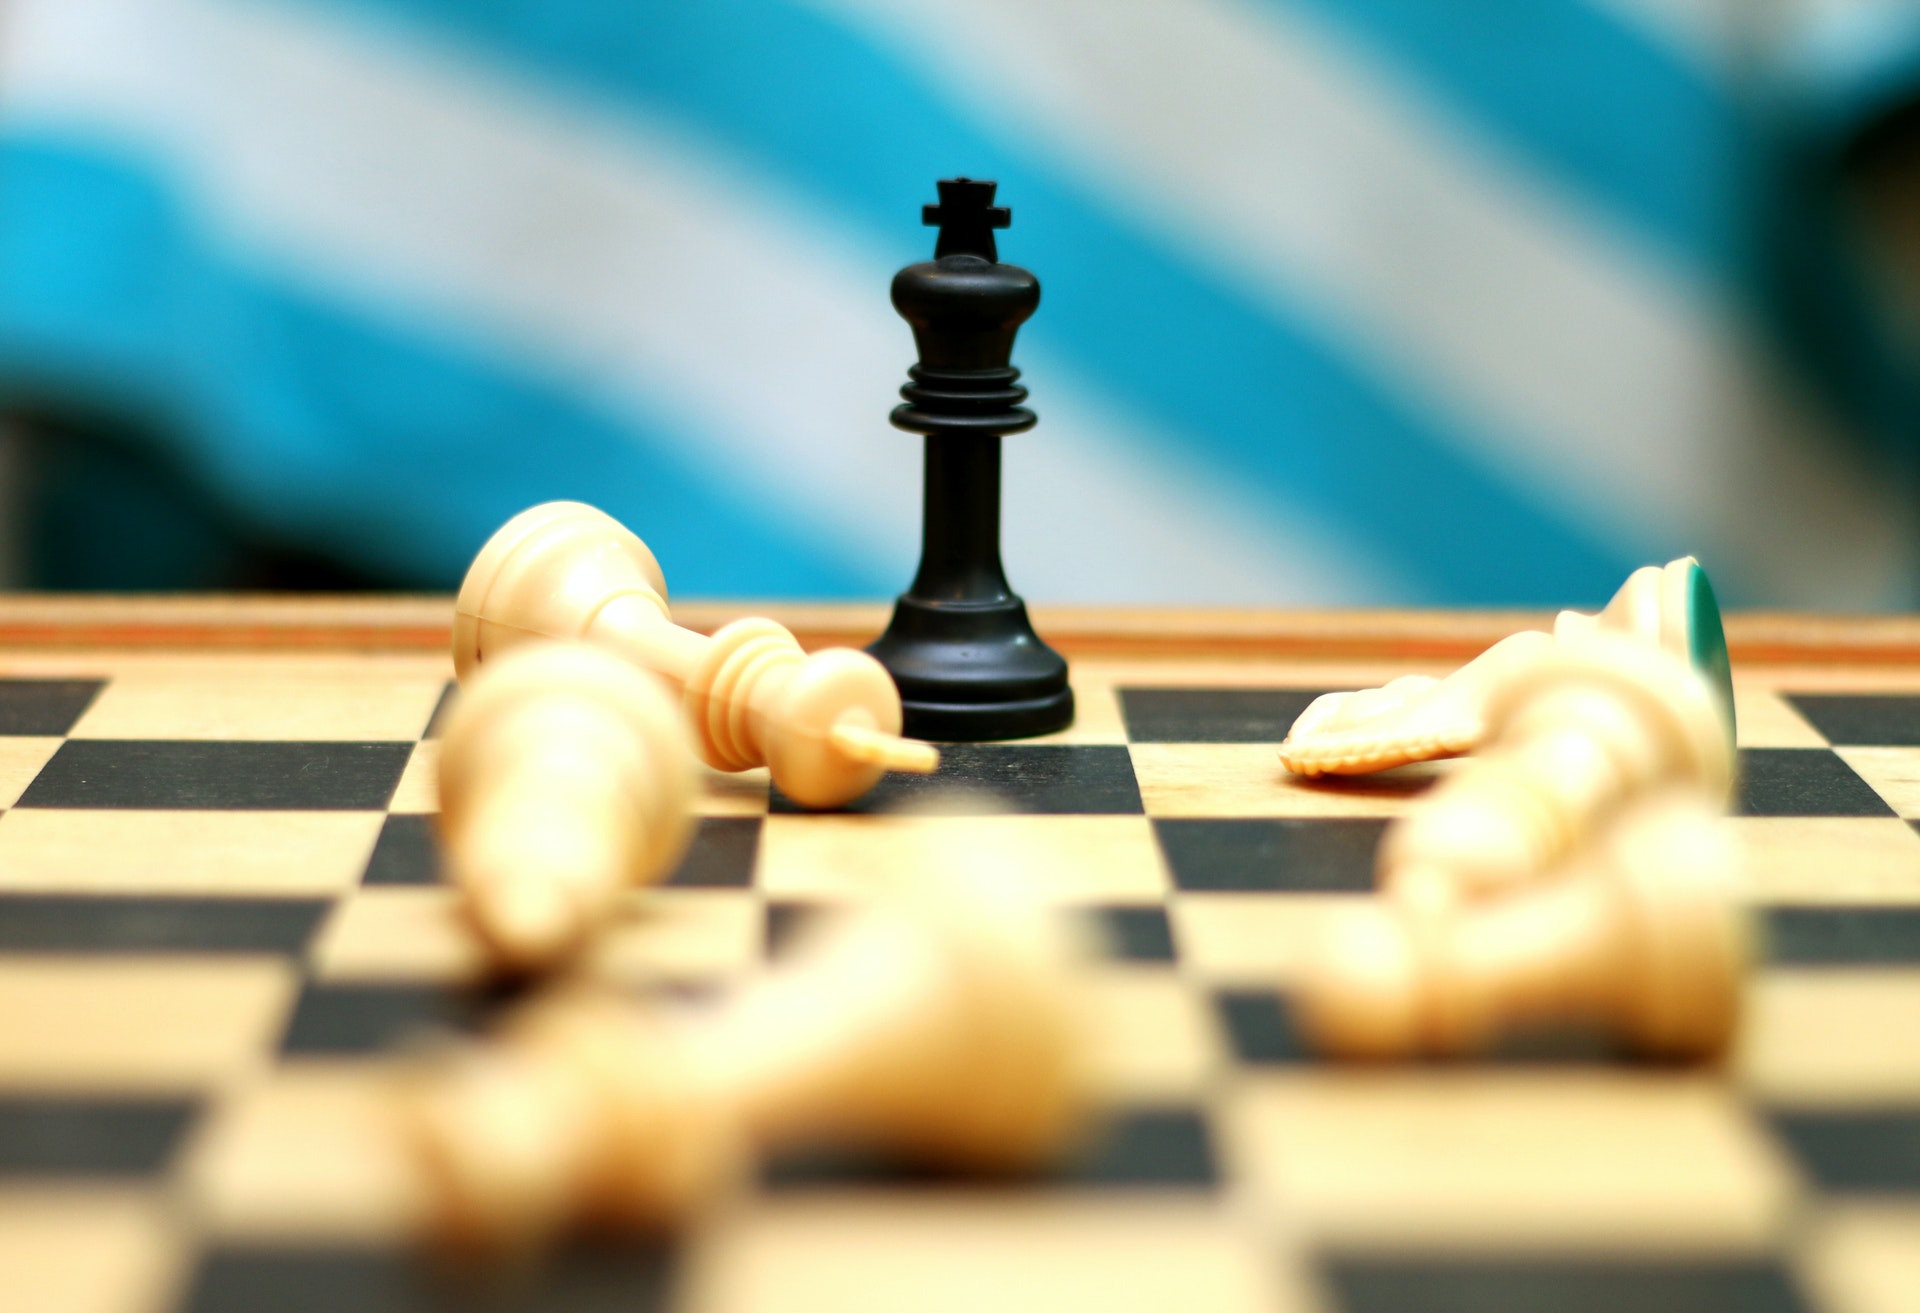 Chess World Championship: Nepo holds Magnus Carslen with white